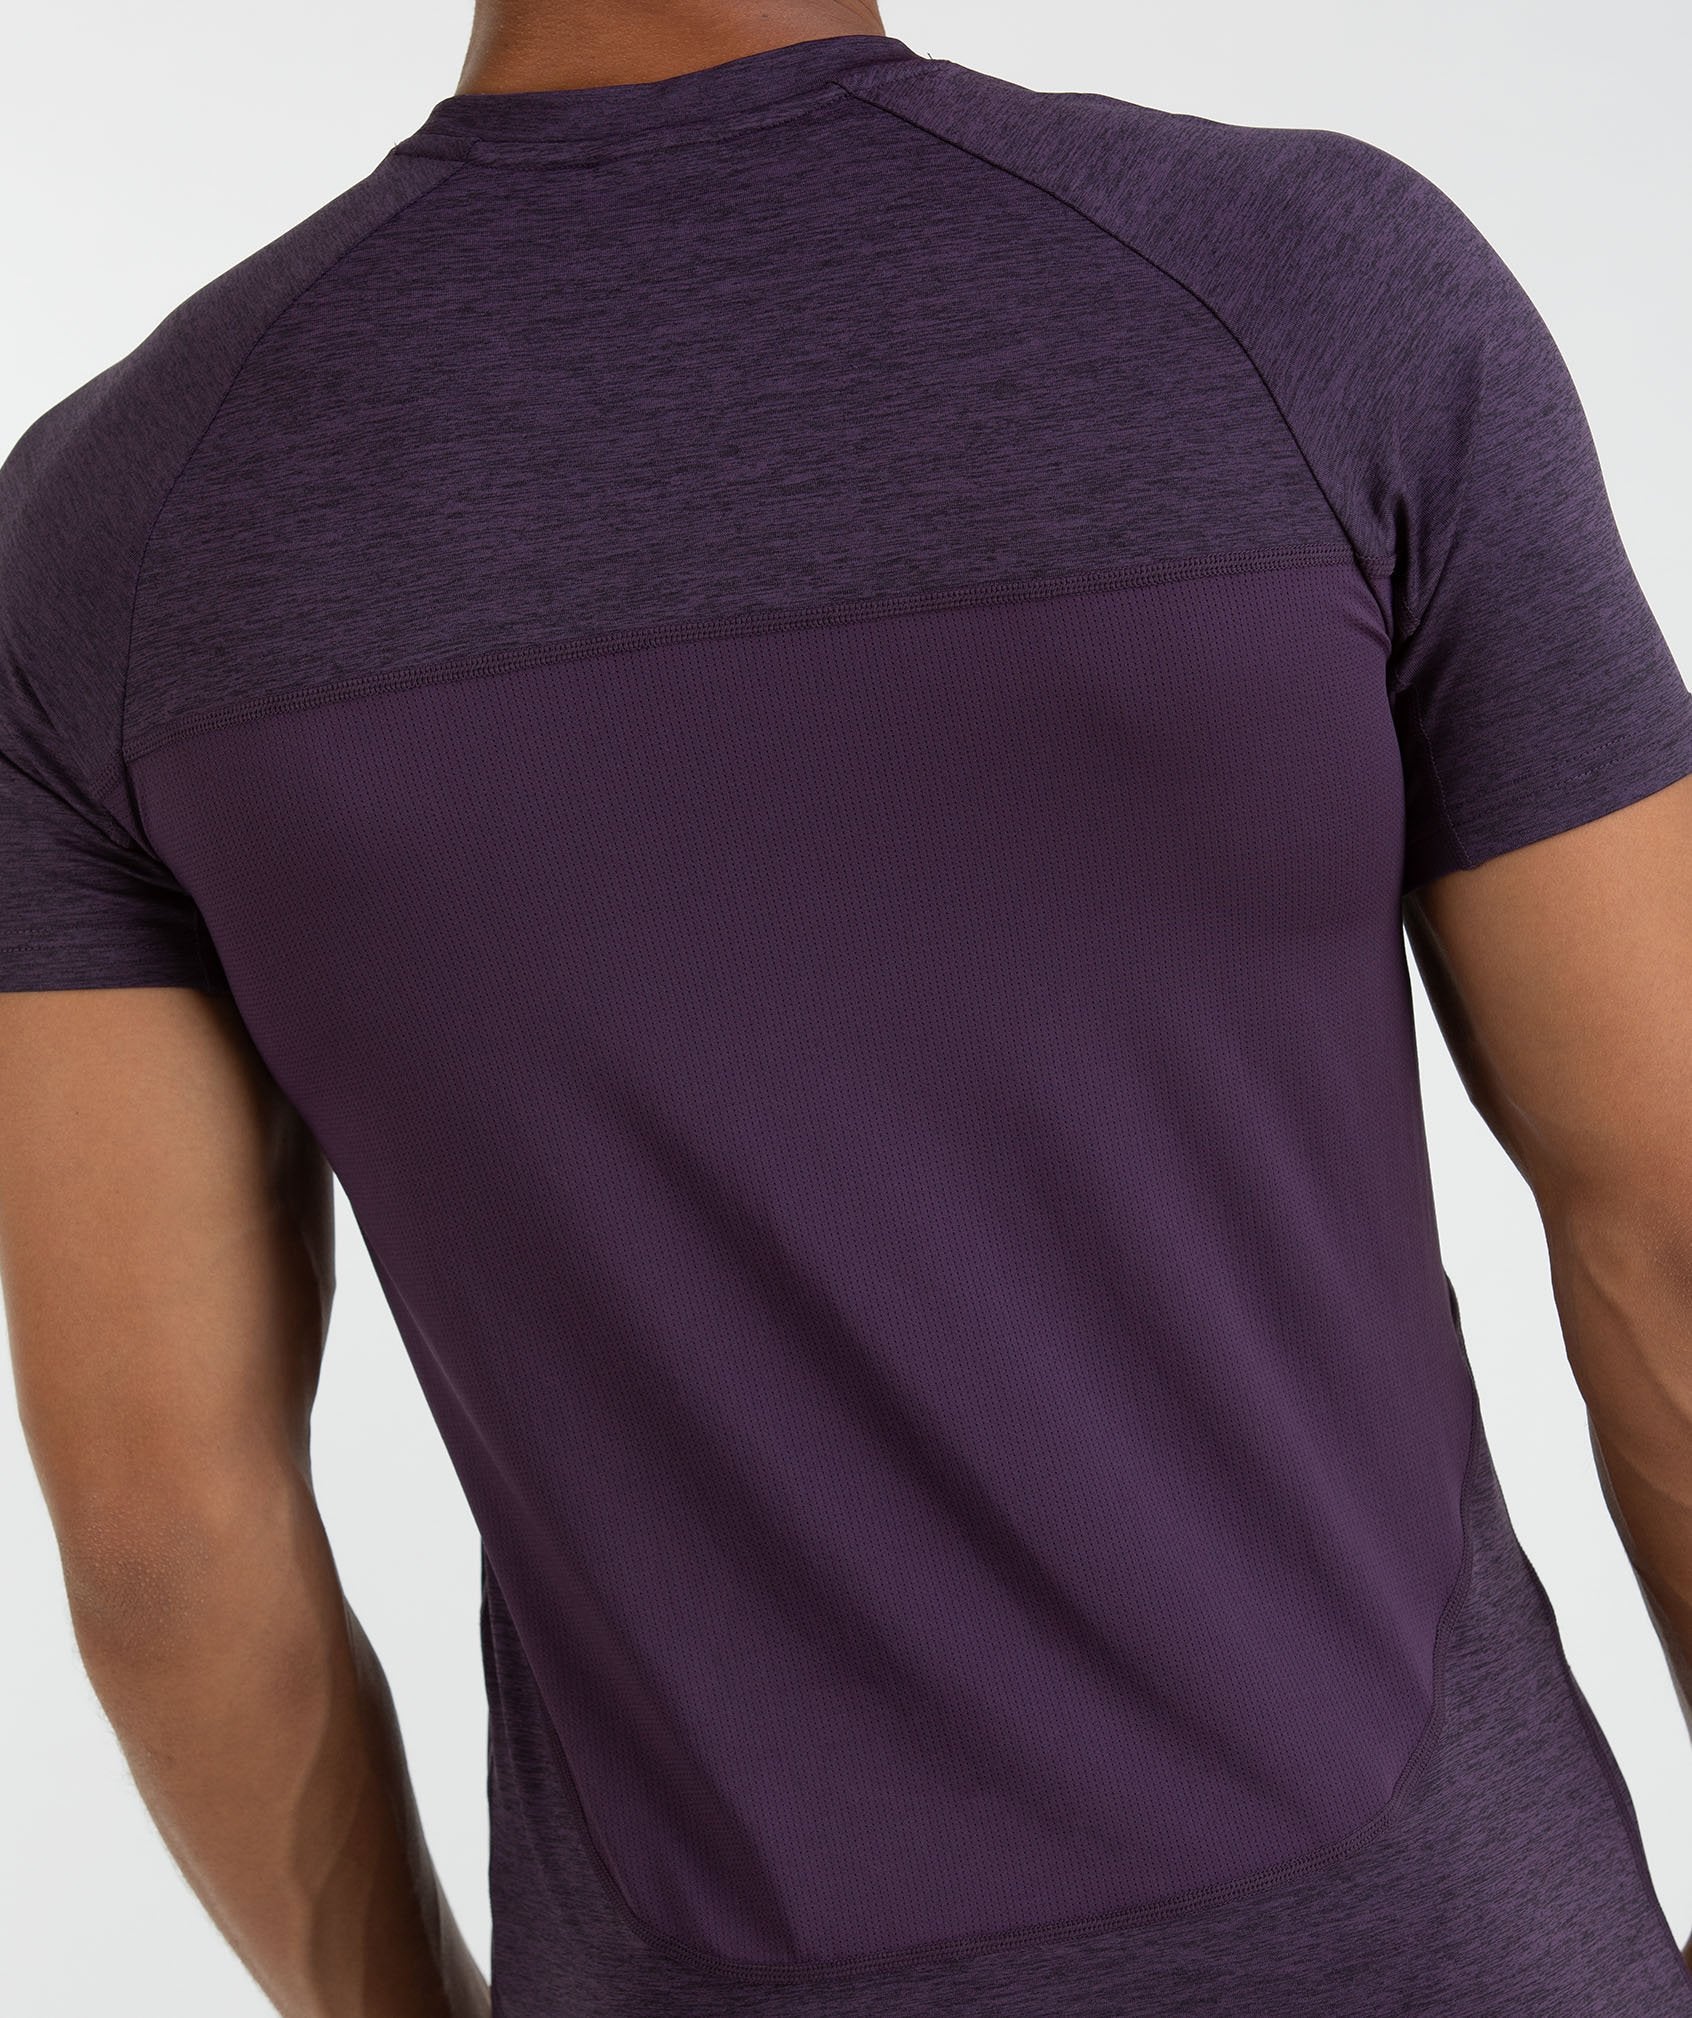 Vertex T-Shirt in Nightshade Purple Marl - view 5